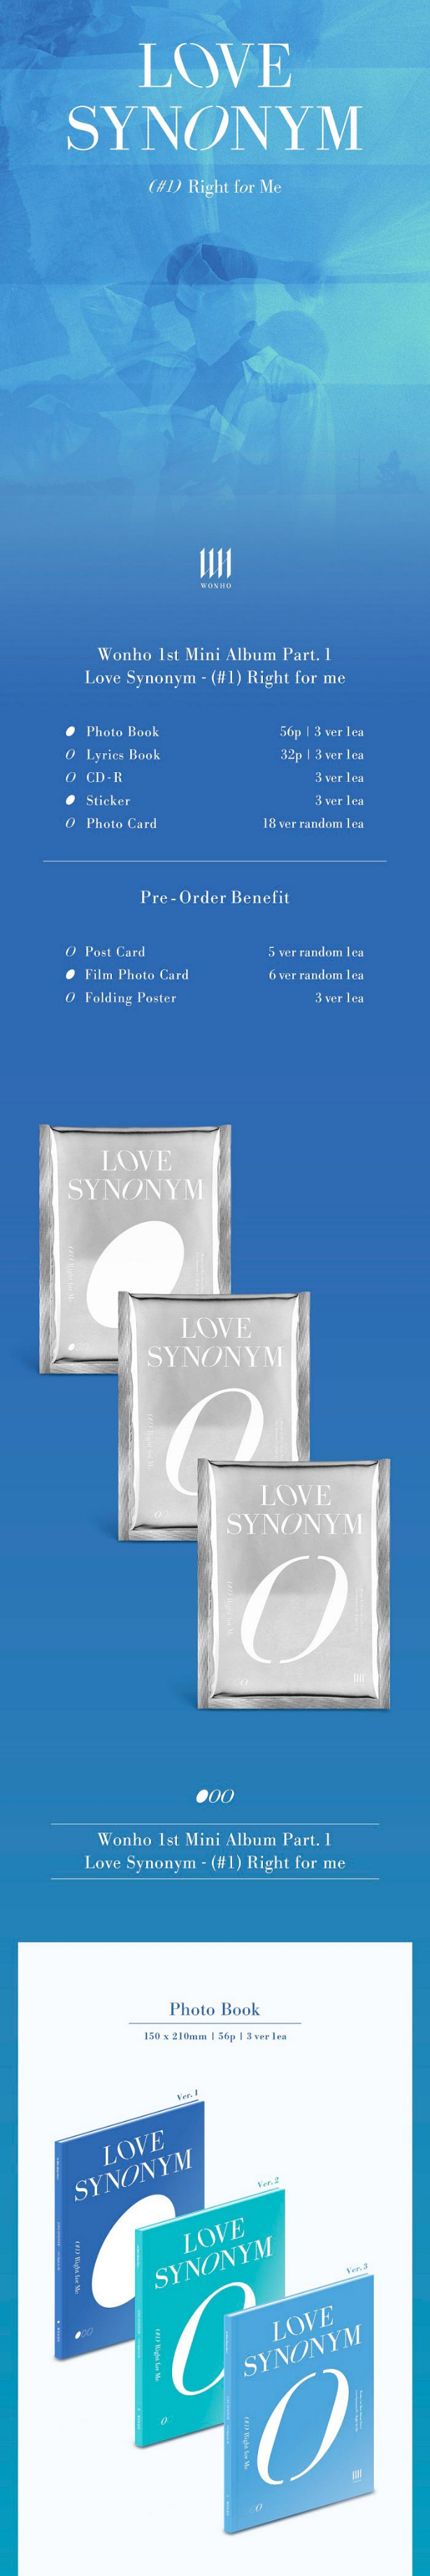 Wonho Mini Album Vol. 1 - LOVE SYNONYM 1. Right for me (Random) (Second Press)